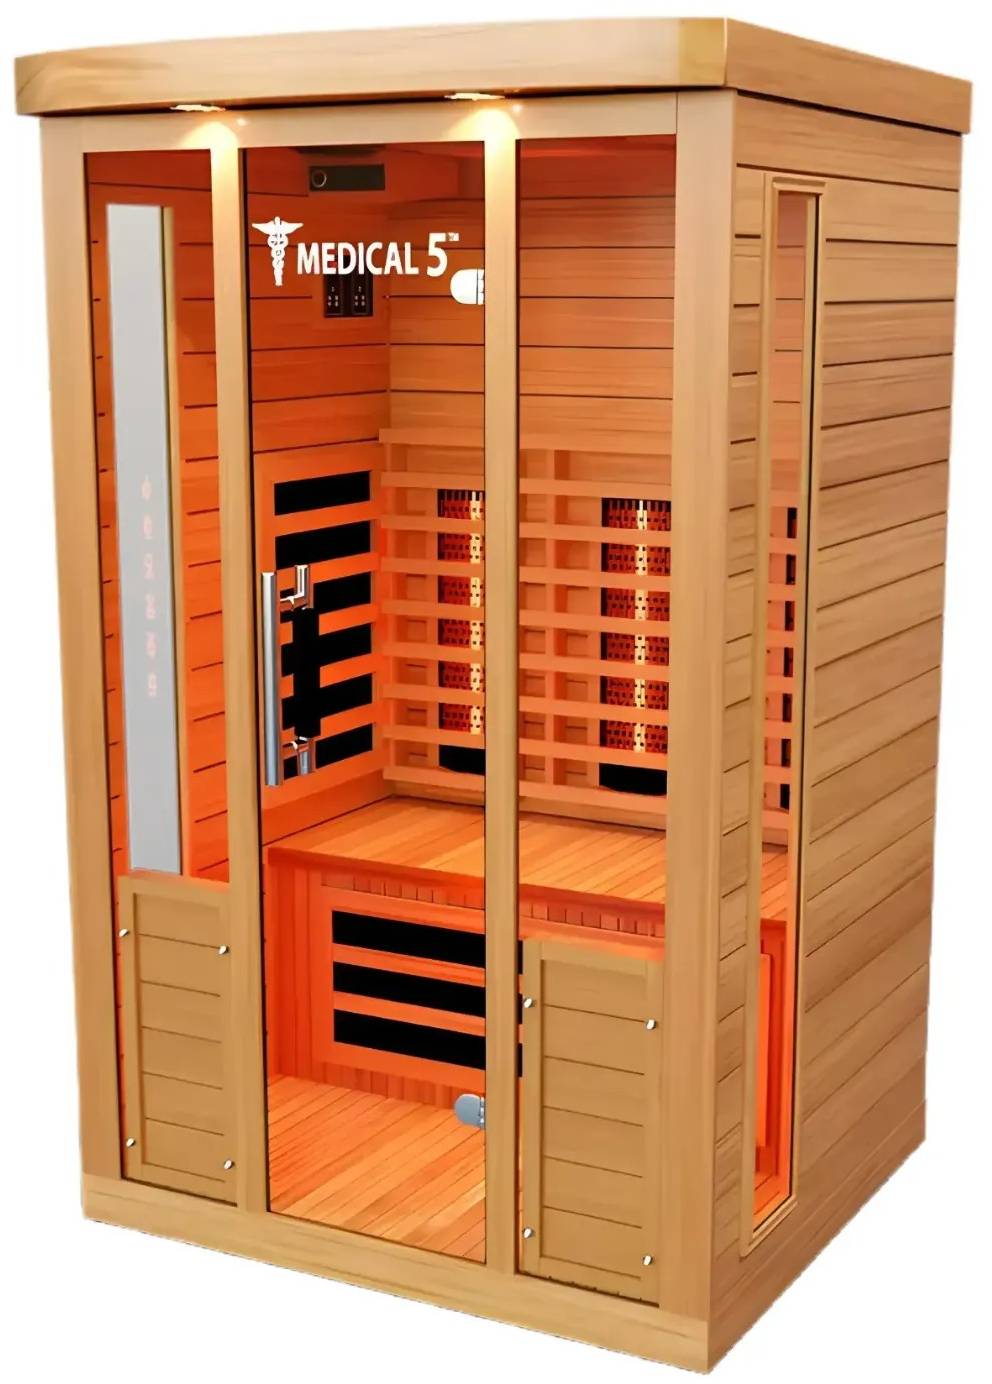 ZiahCare's Medical Saunas 3 Person Full Spectrum Infrared Sauna Model 5 Mockup Image 3